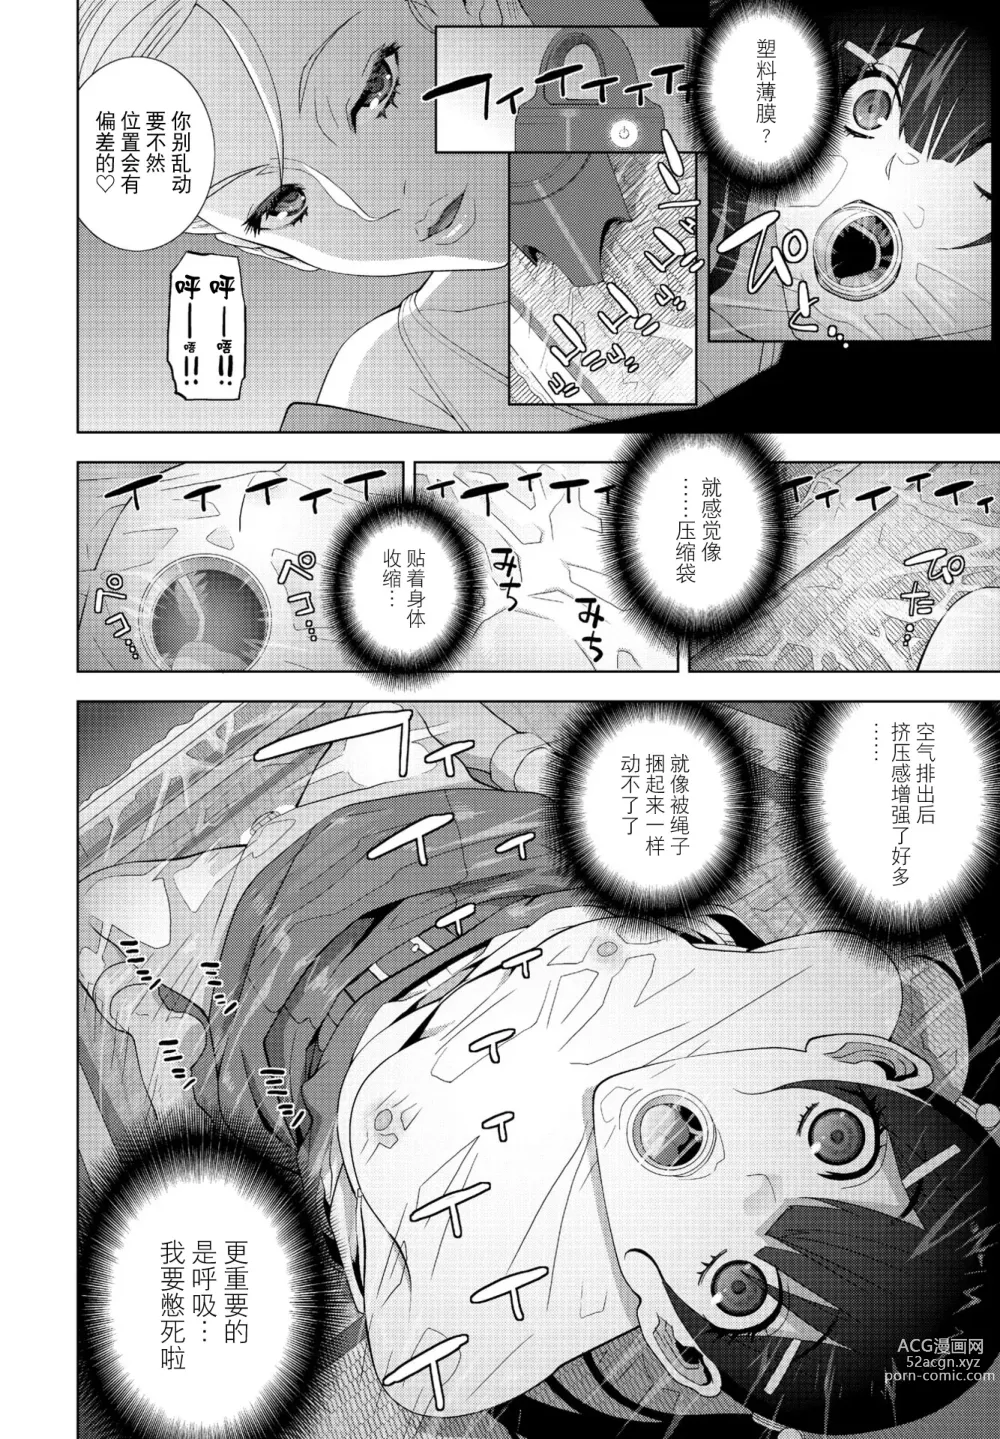 Page 6 of manga Imouto ni Chikau Hi